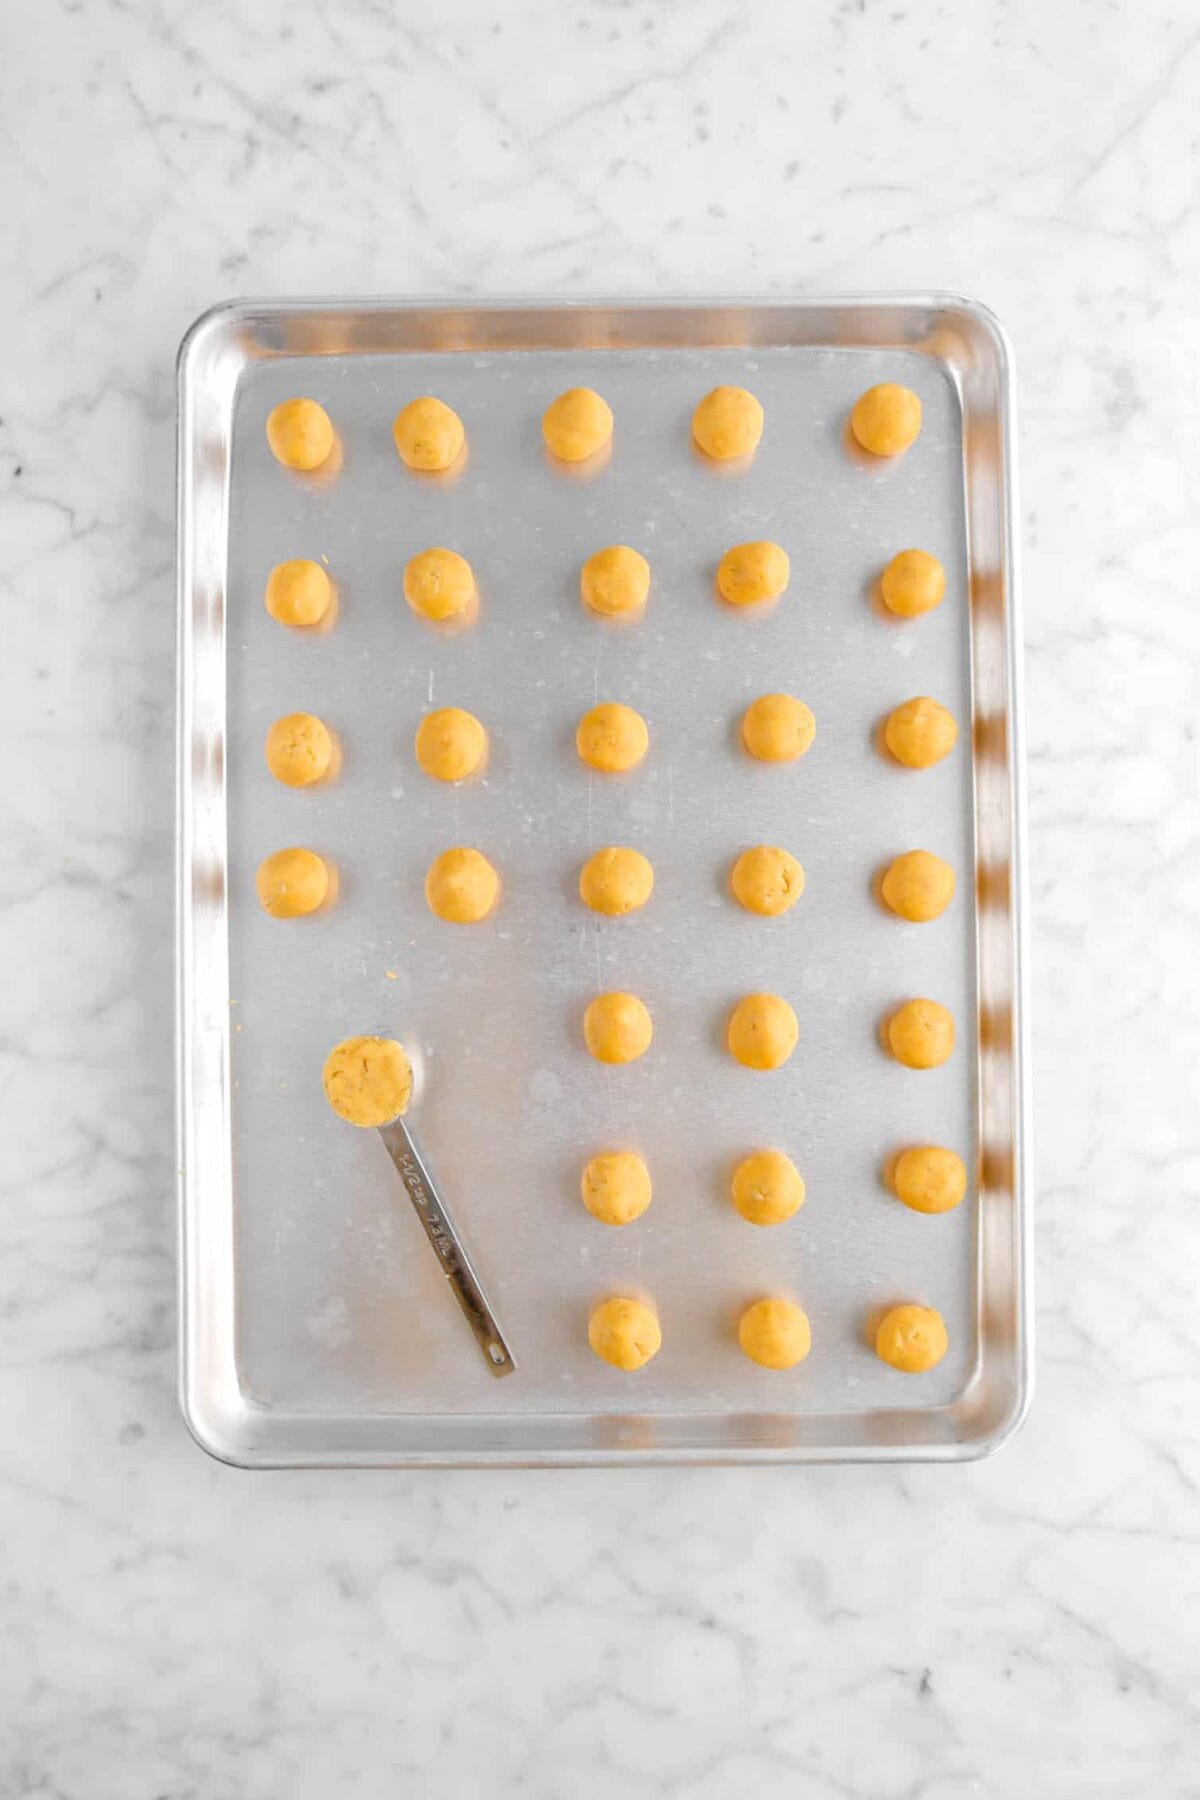 dough balls on sheet pan with teaspoon on pan